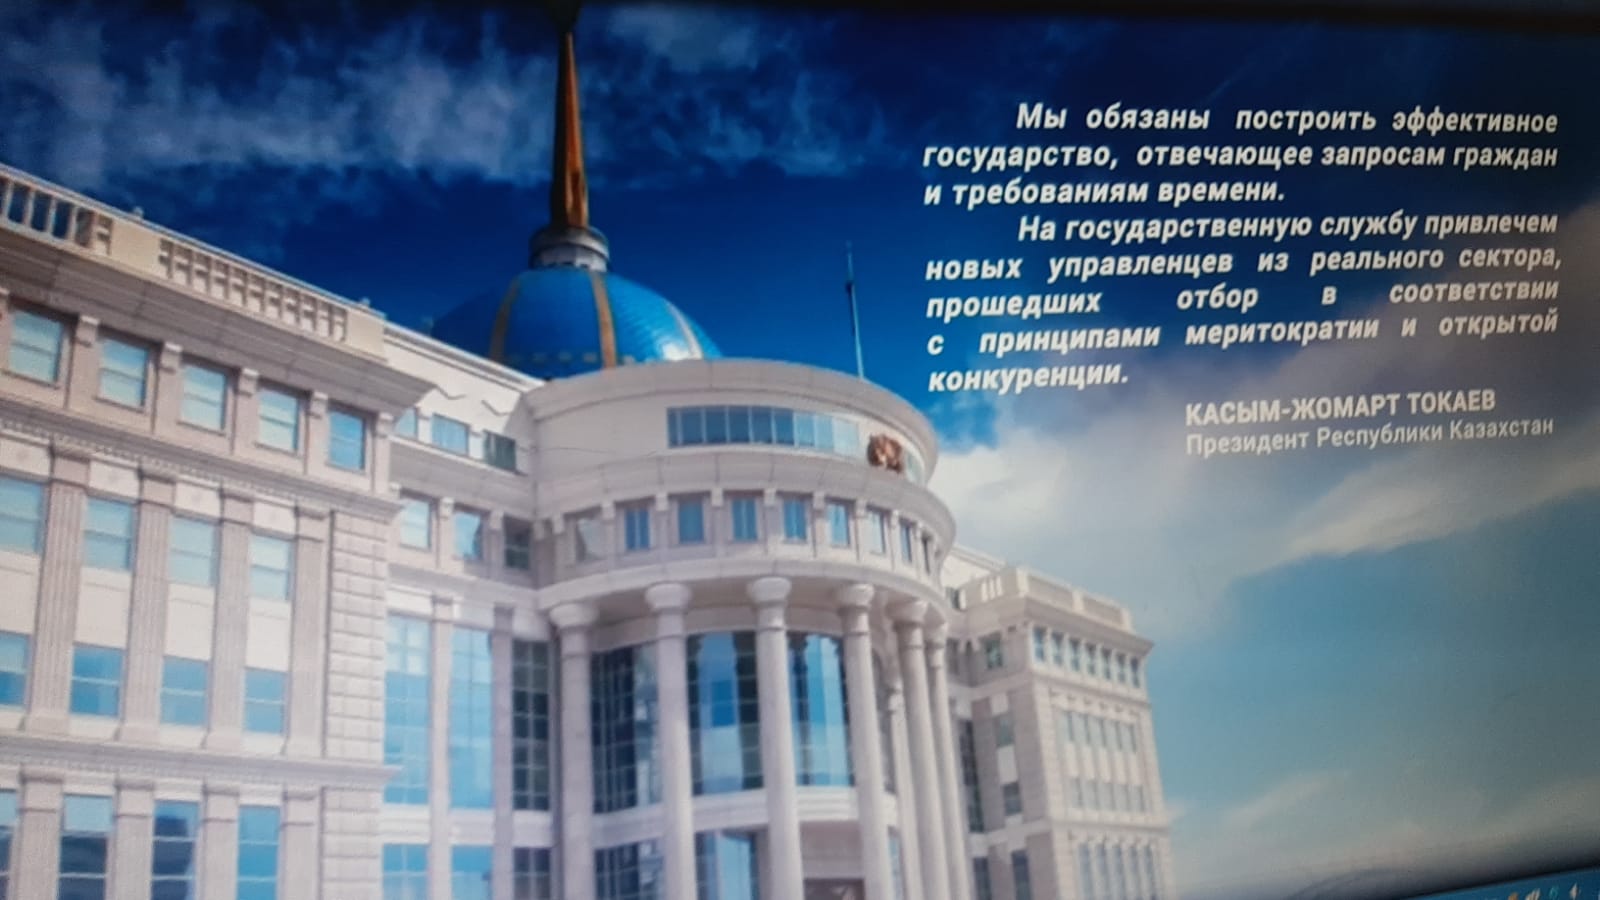 Государственный сайт казахстана